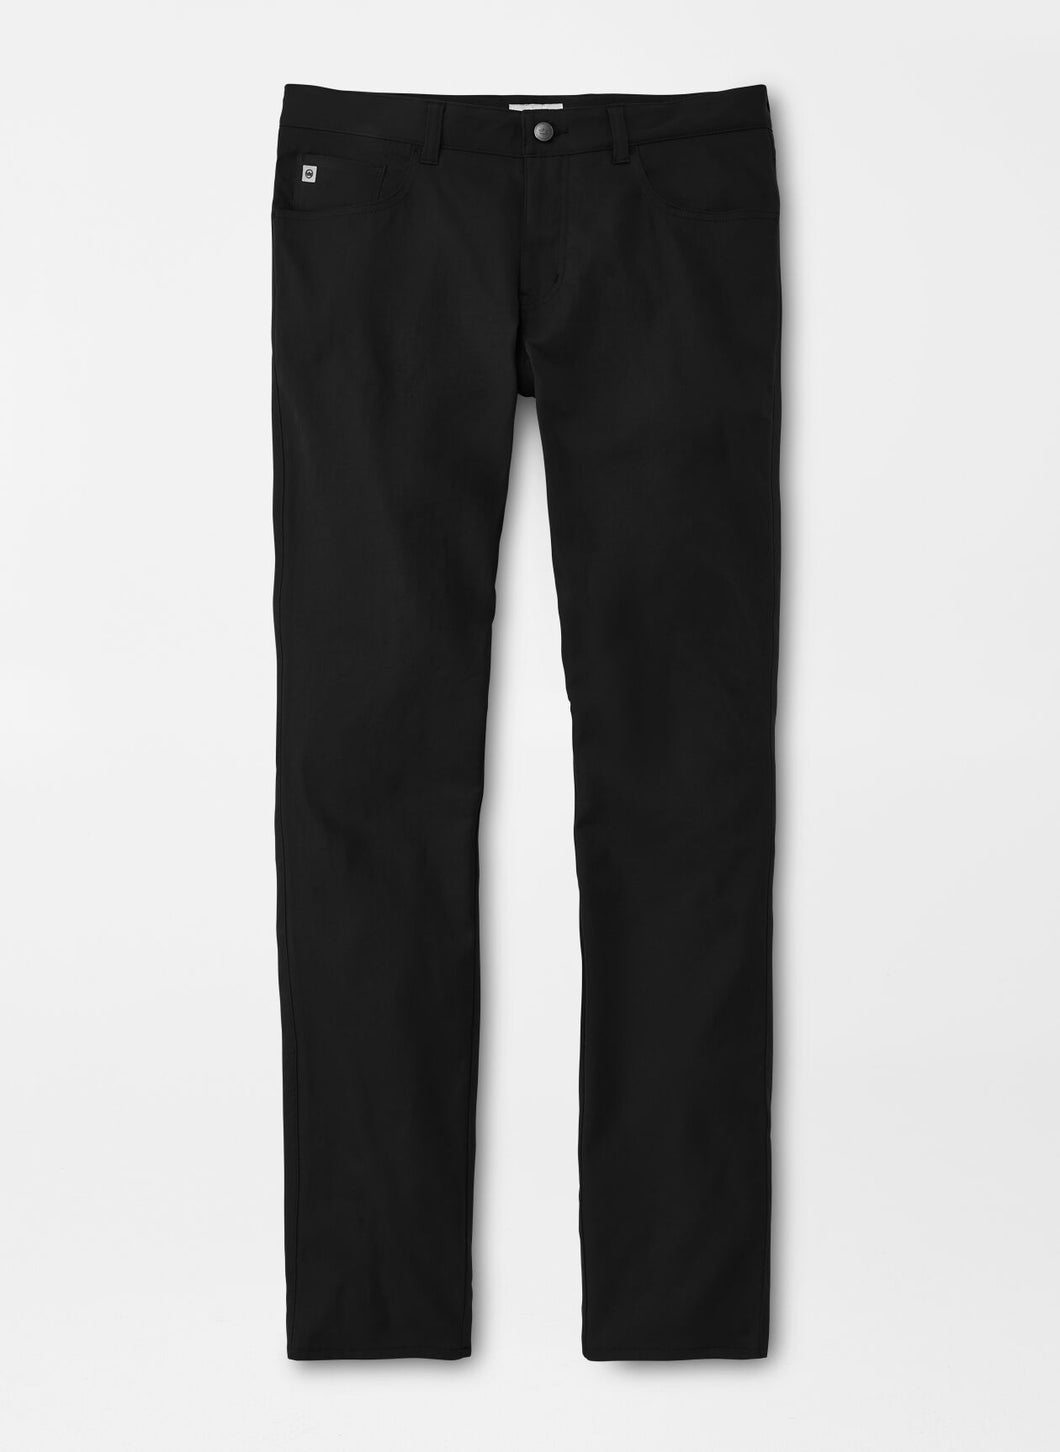 Peter Millar eb66 Performance Five-Pocket Pant in Black